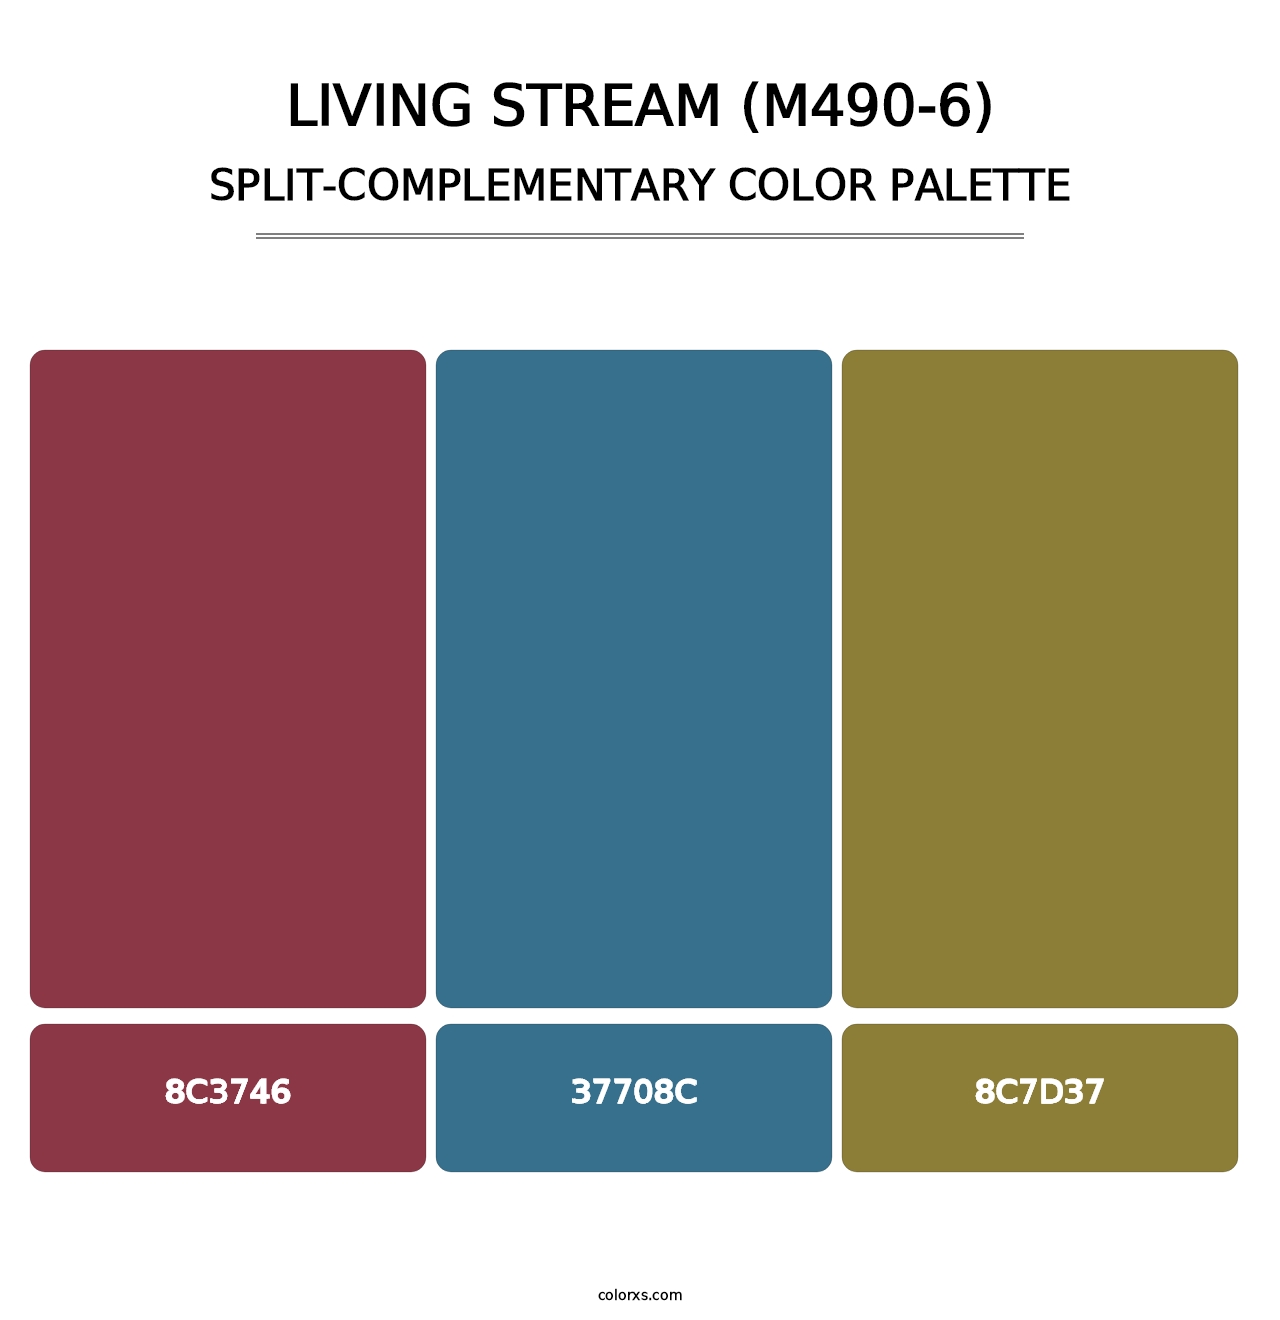 Living Stream (M490-6) - Split-Complementary Color Palette